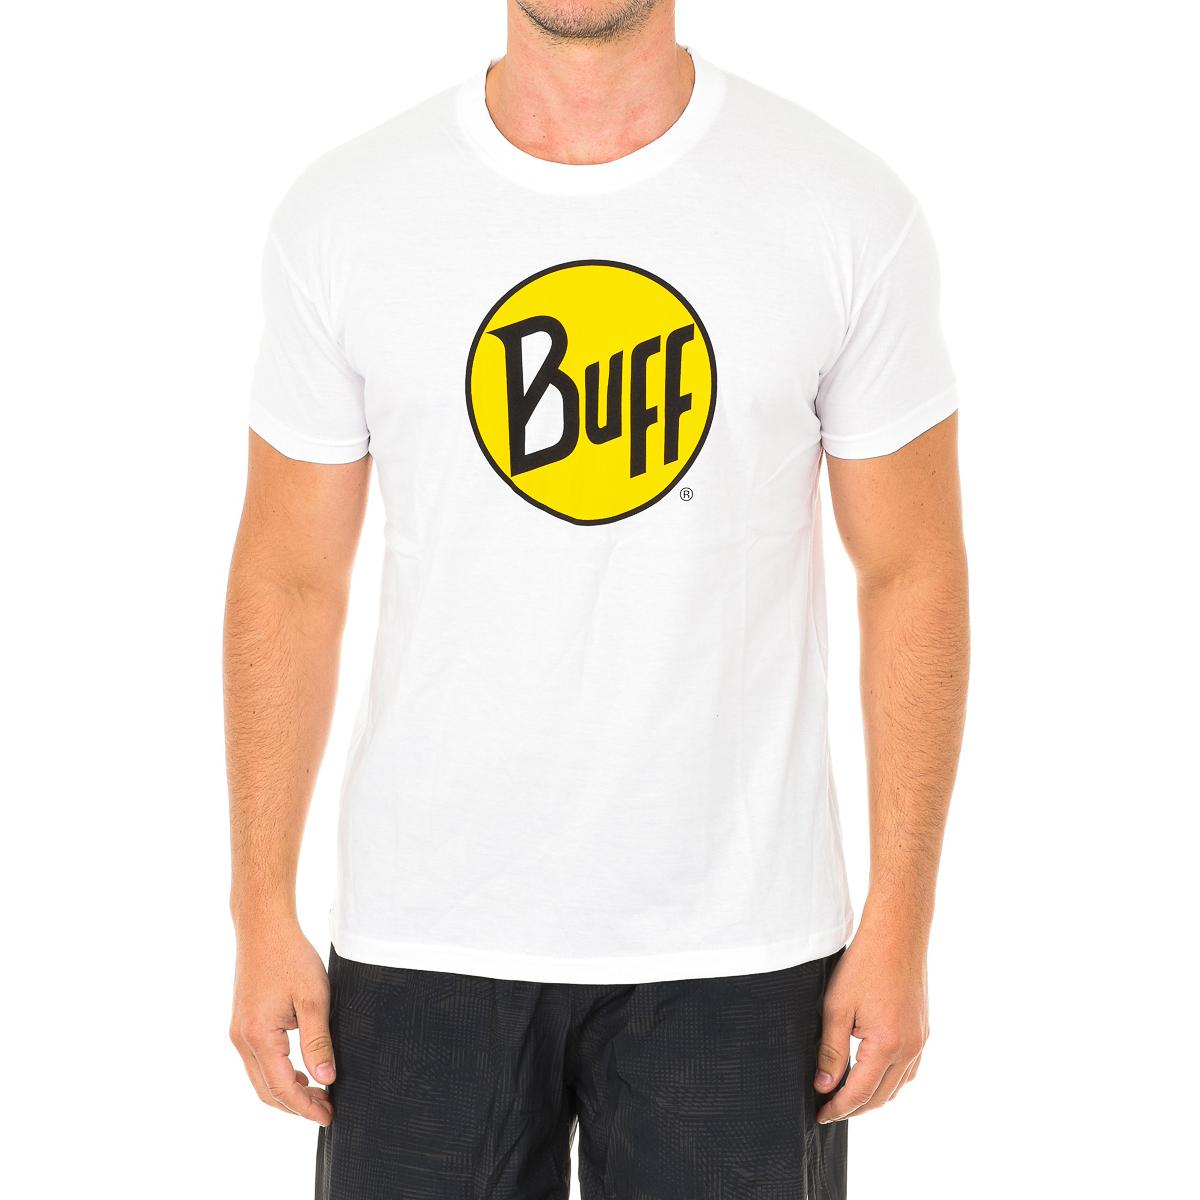 Buff Camiseta manga corta para deporte al aire libre BF10100 hombre